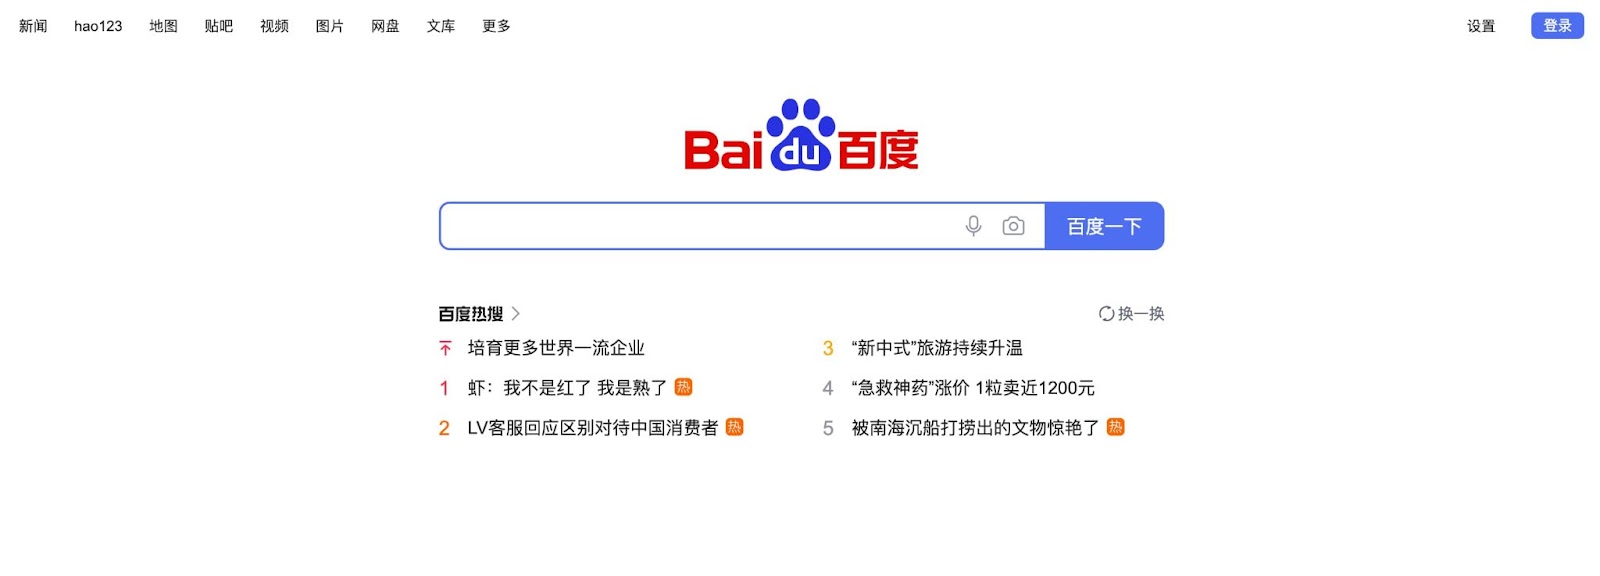 Baidu landing page, which is in Mandarin.